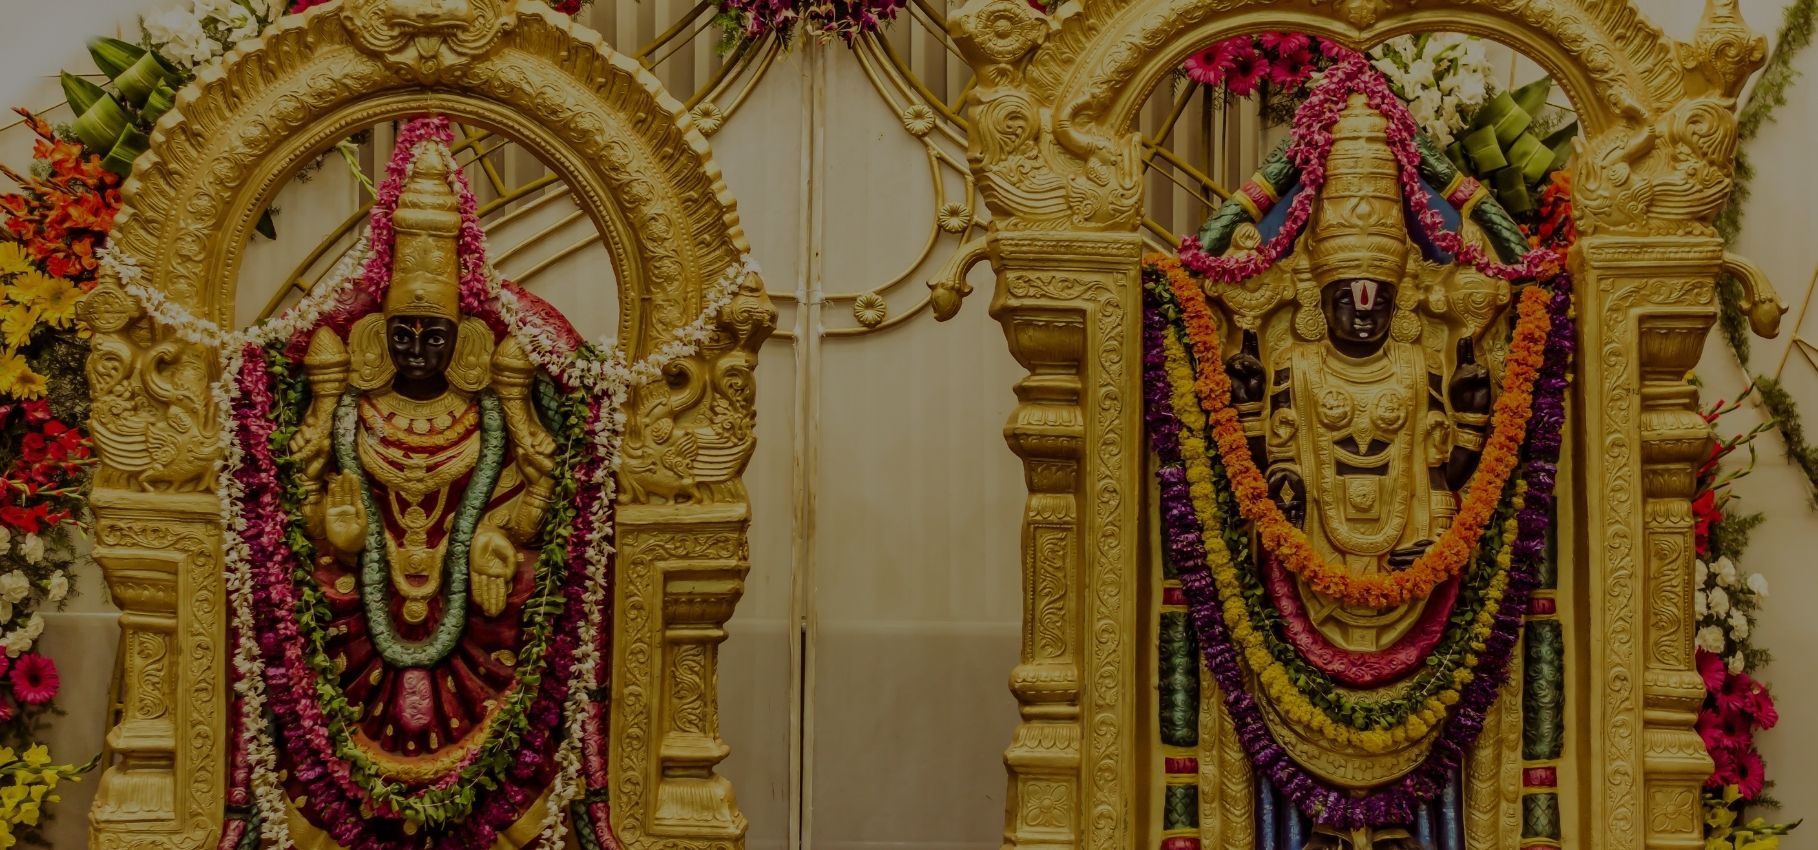 How to visit Tirupati Balaji for Darshan and Sightseeing